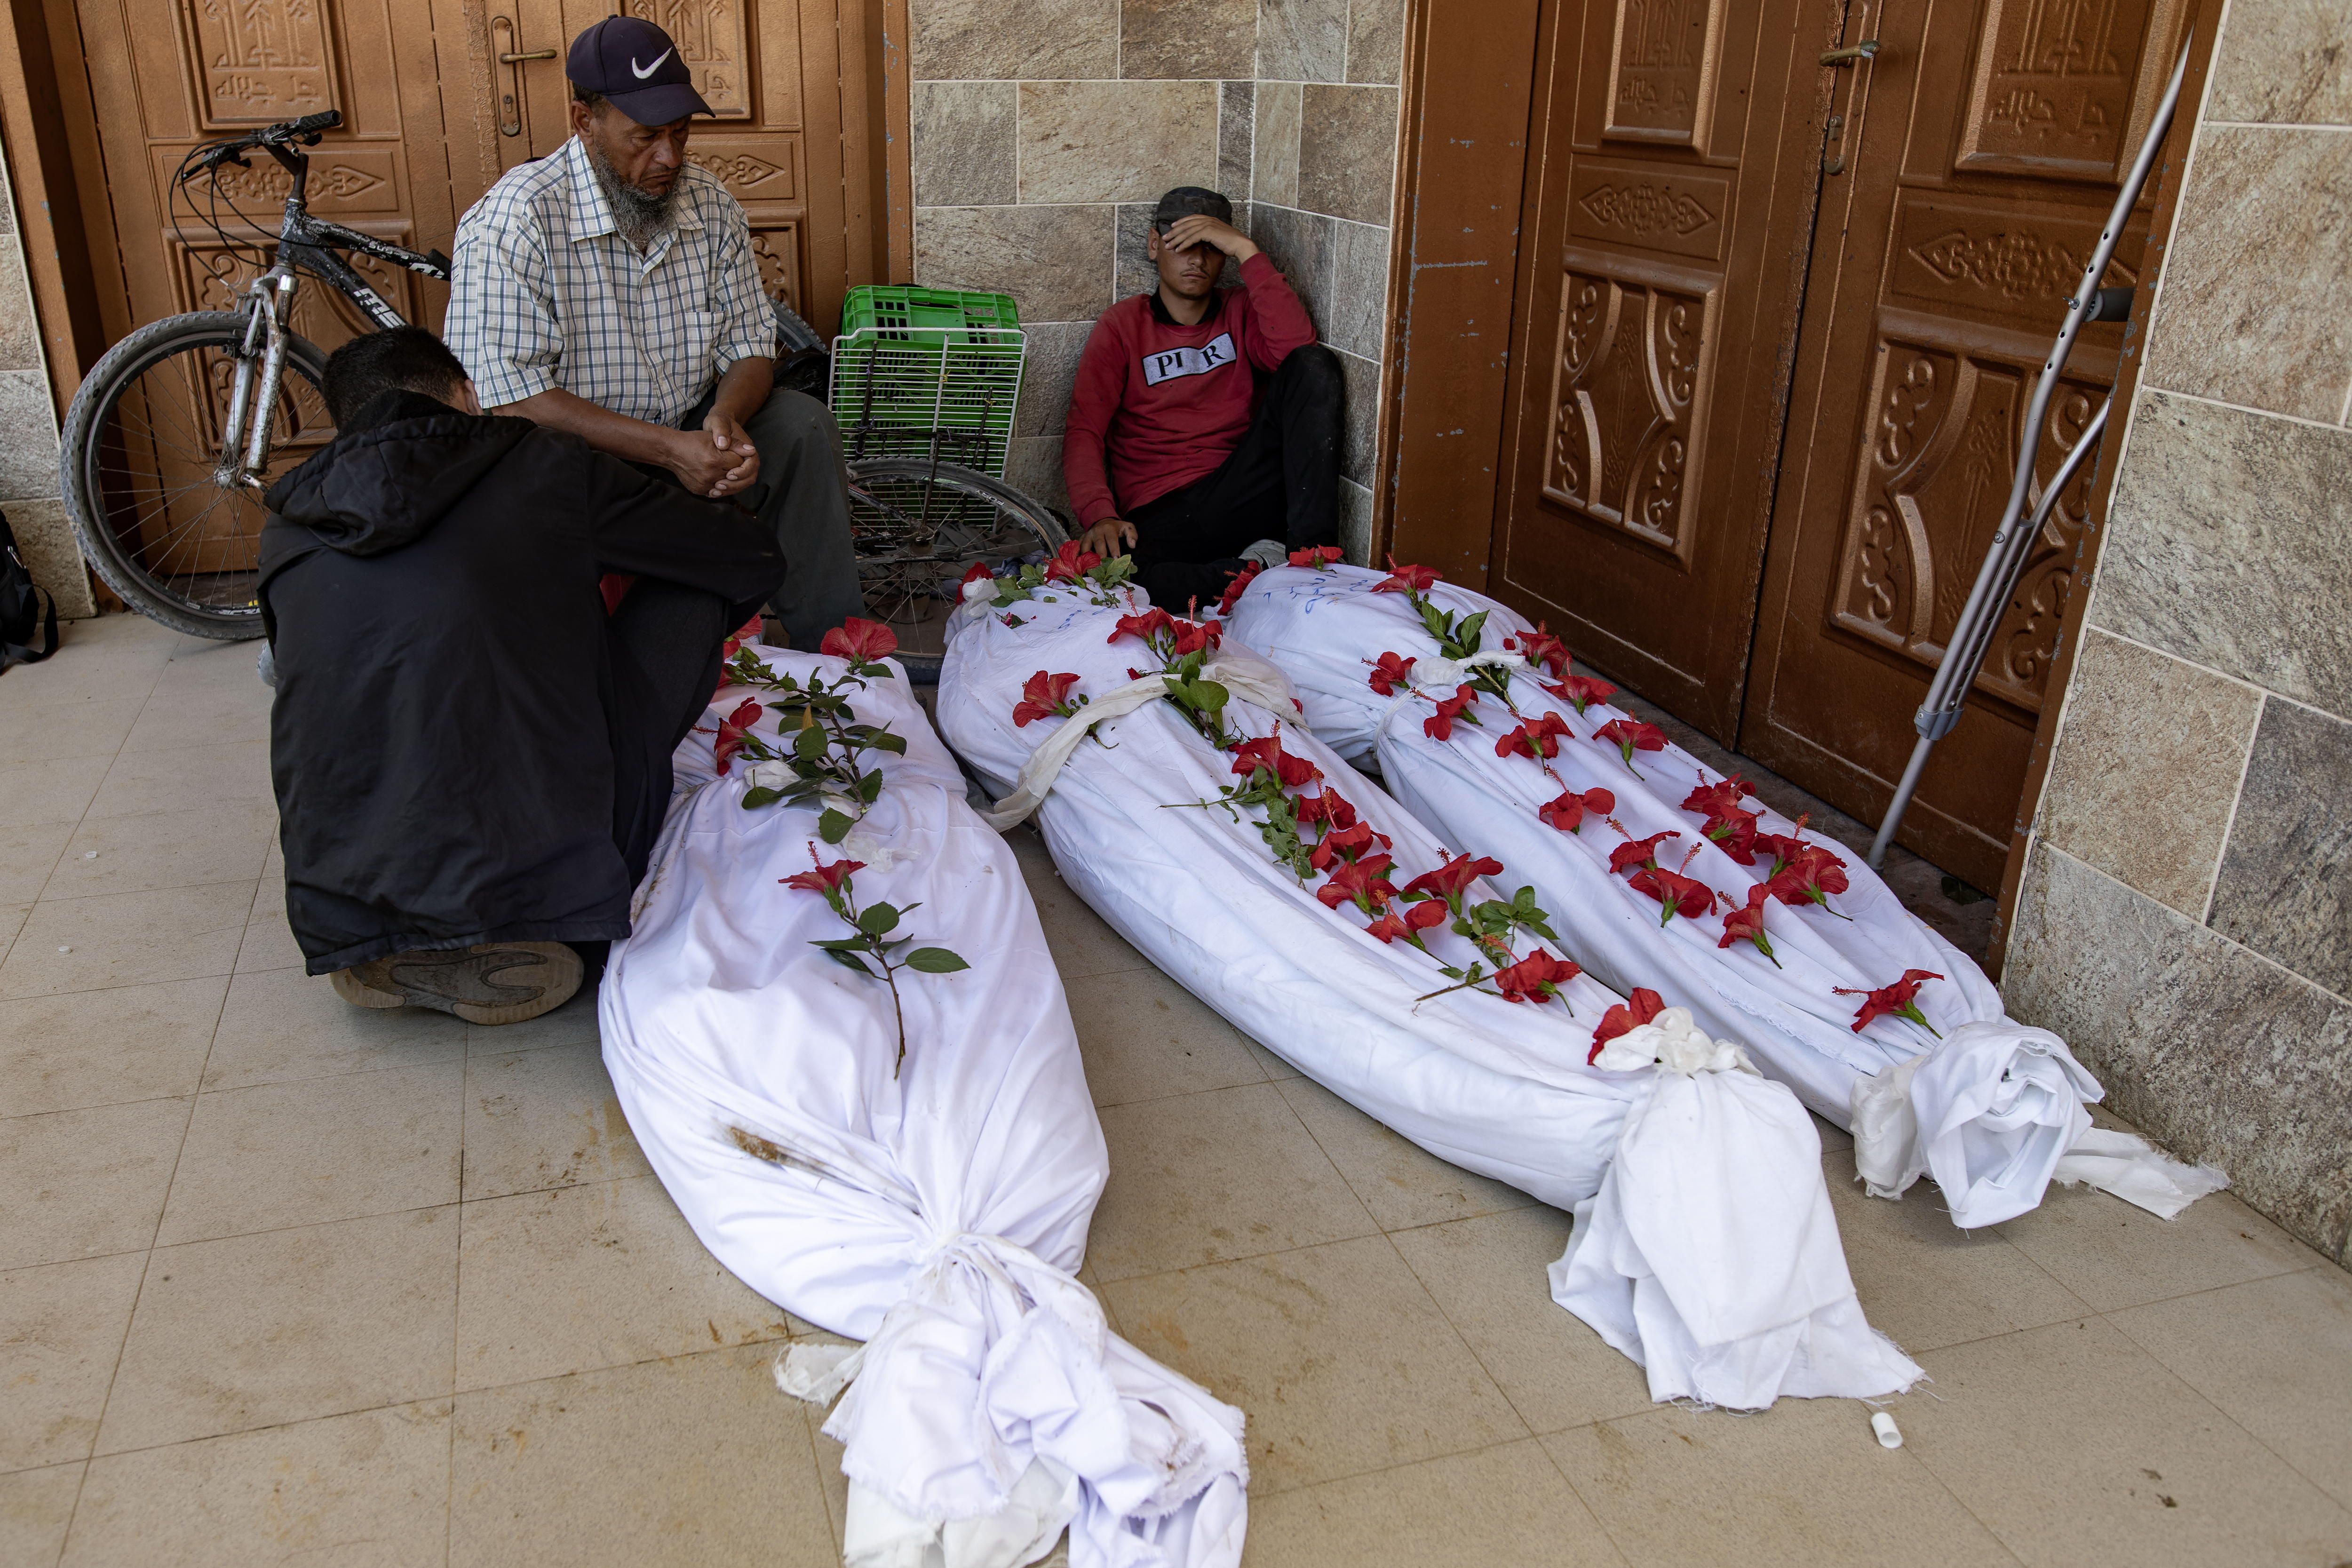 (ID_13806376) MIDEAST ISRAEL PALESTINIANS GAZA CONFLICT